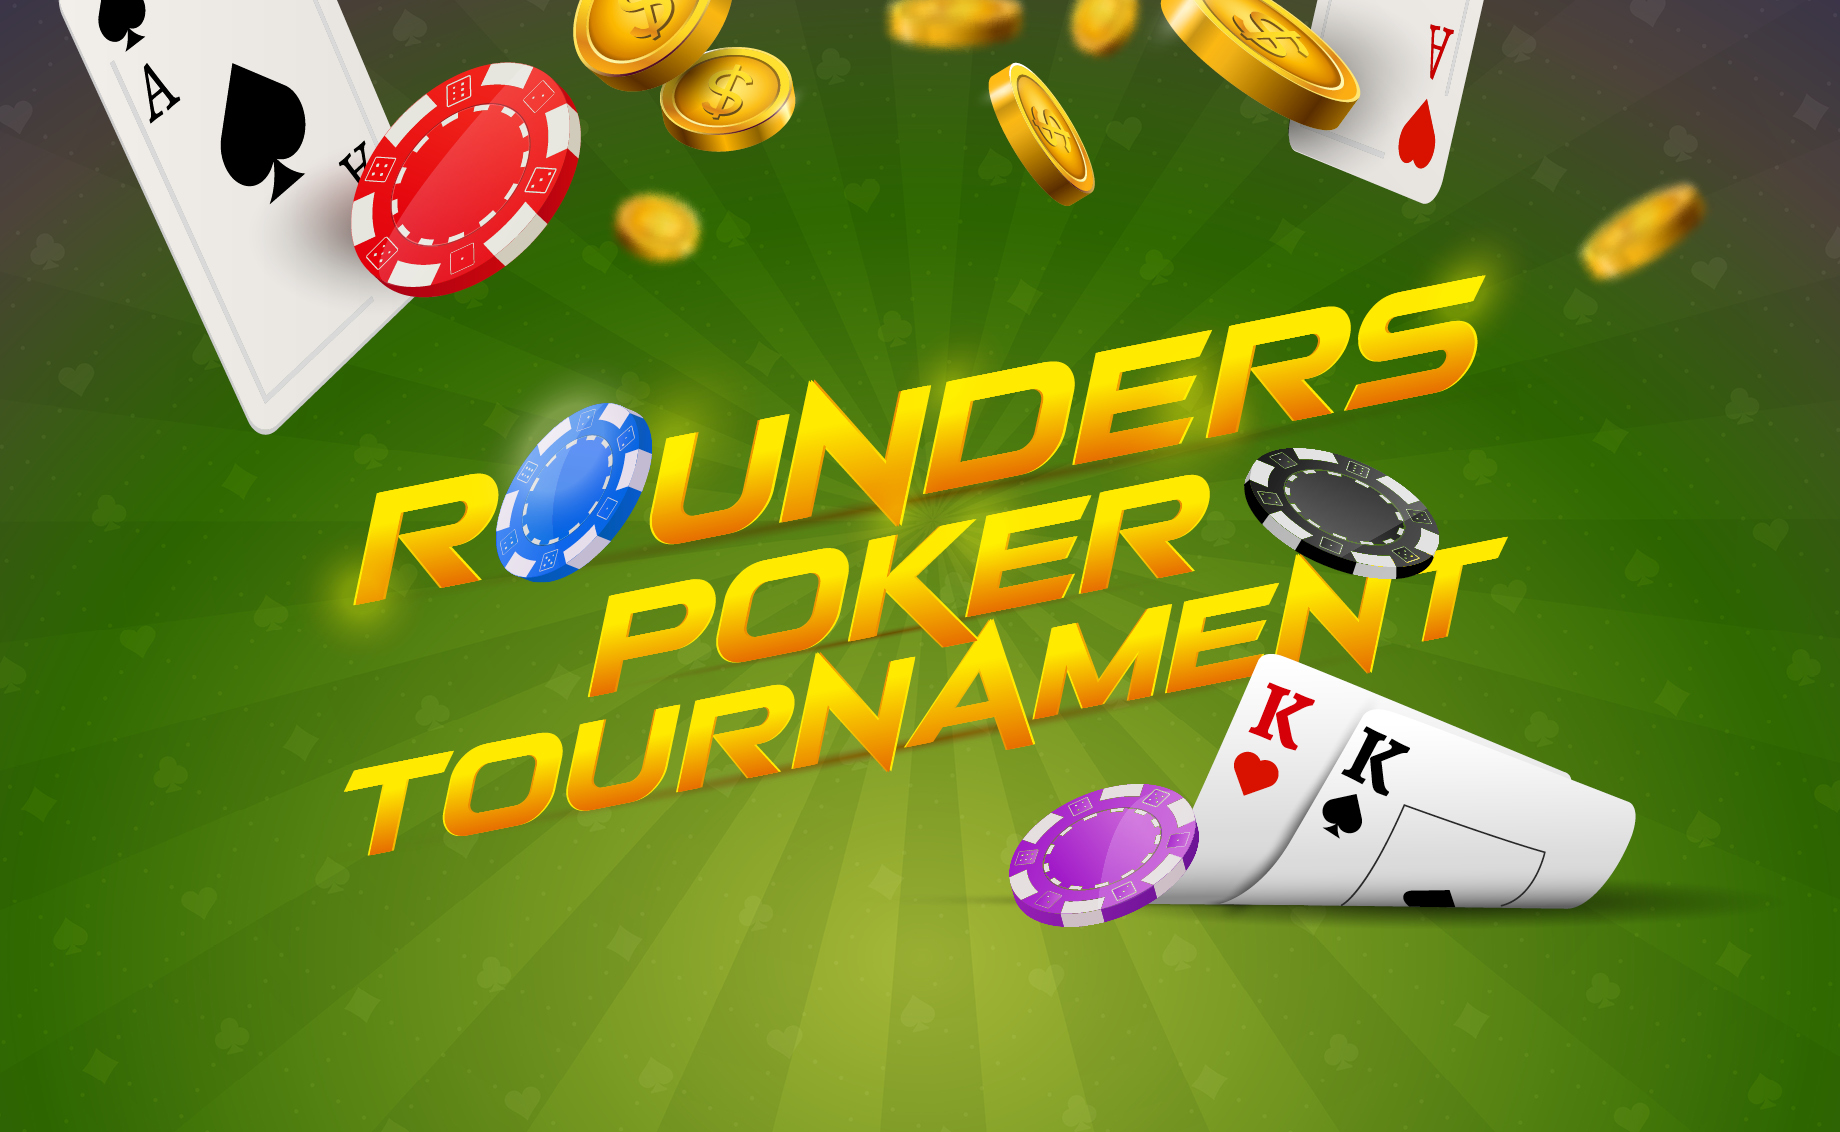 rounders final scene poker